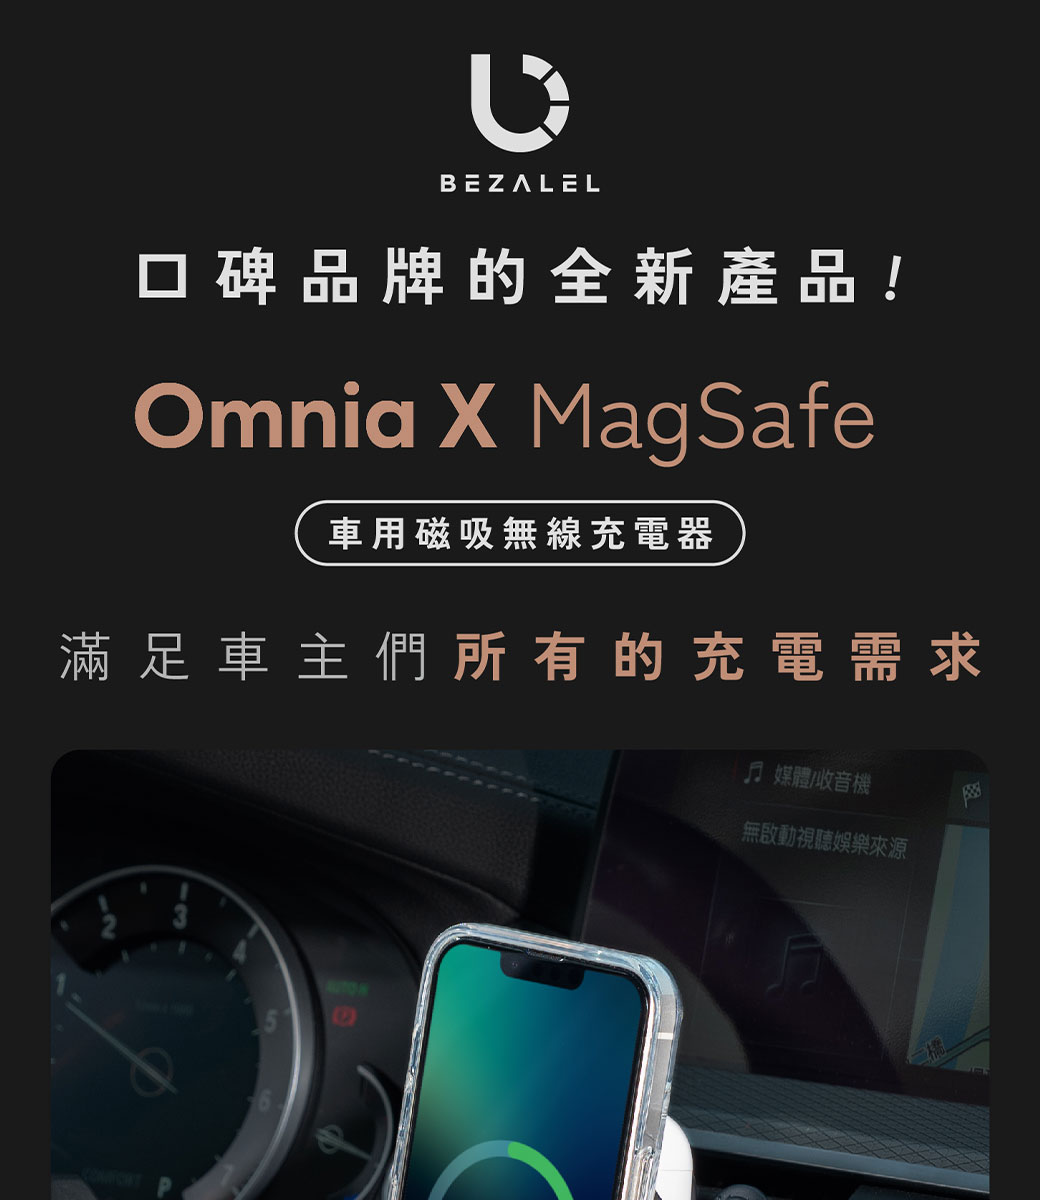 BEZALEL口碑品牌的全新產品!Omnia  MagSafe車用磁吸無線充電器滿足車主們所有的充電需求 媒體/收音機無啟動視聽娛樂來源の